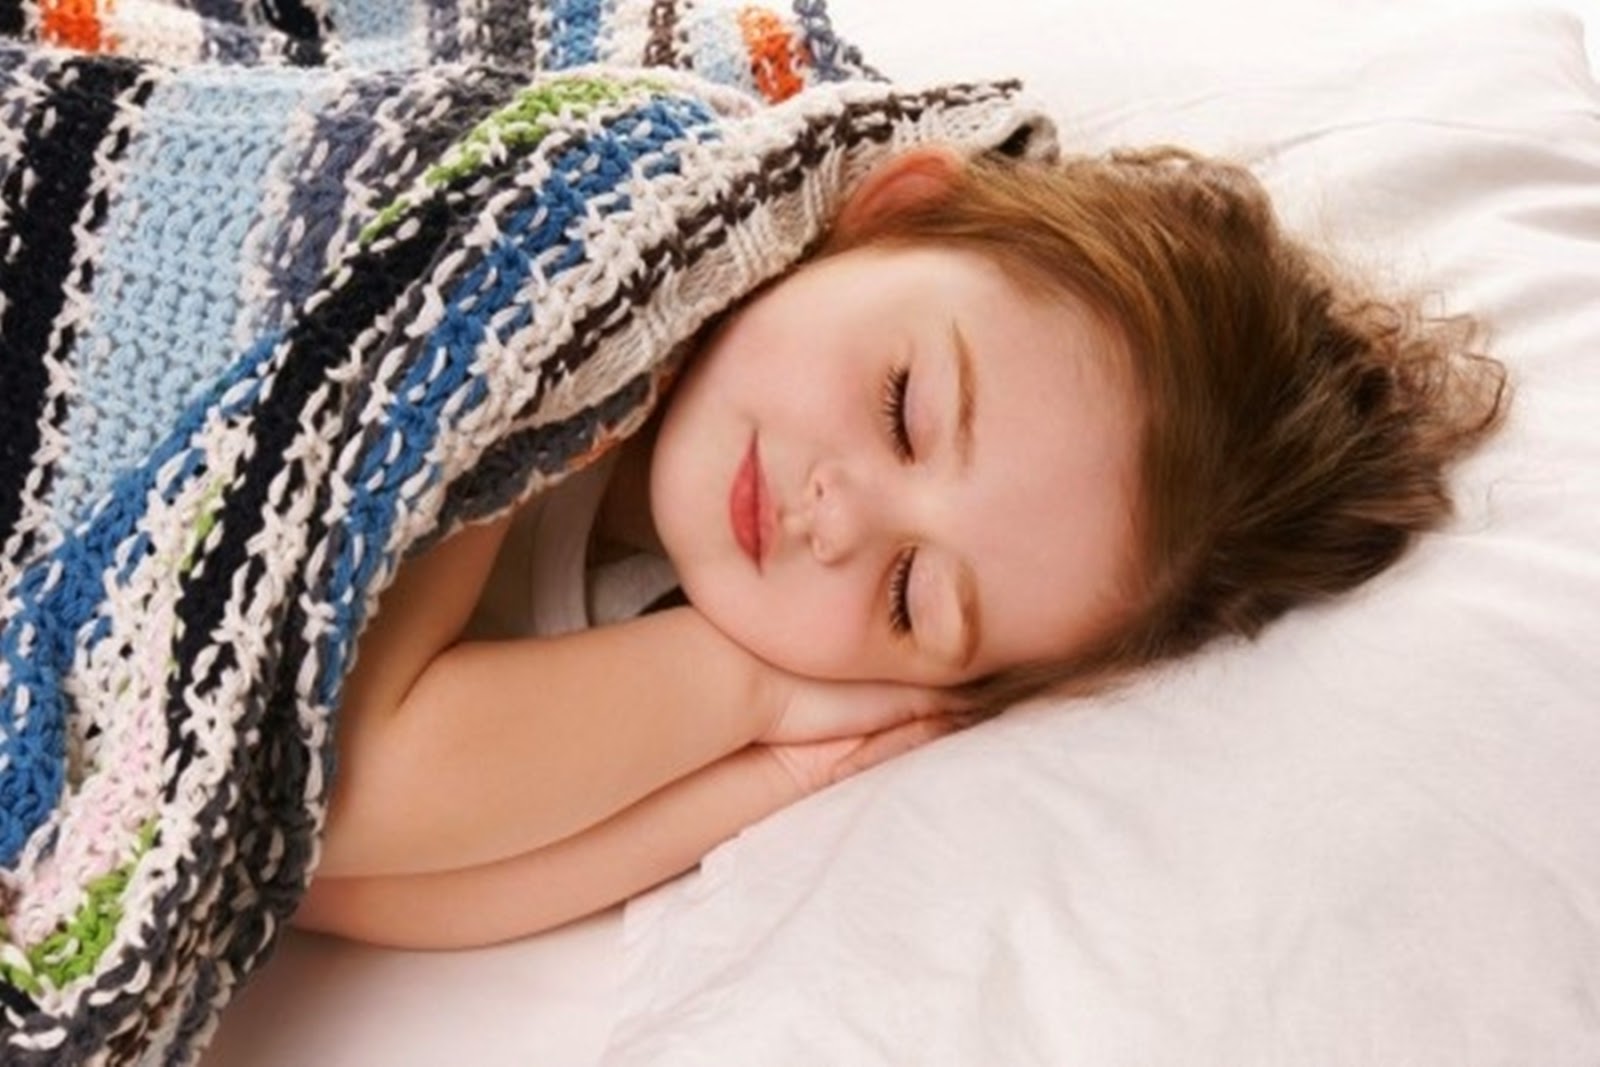 sleeping baby wallpaper,child,sleep,nap,baby,crochet